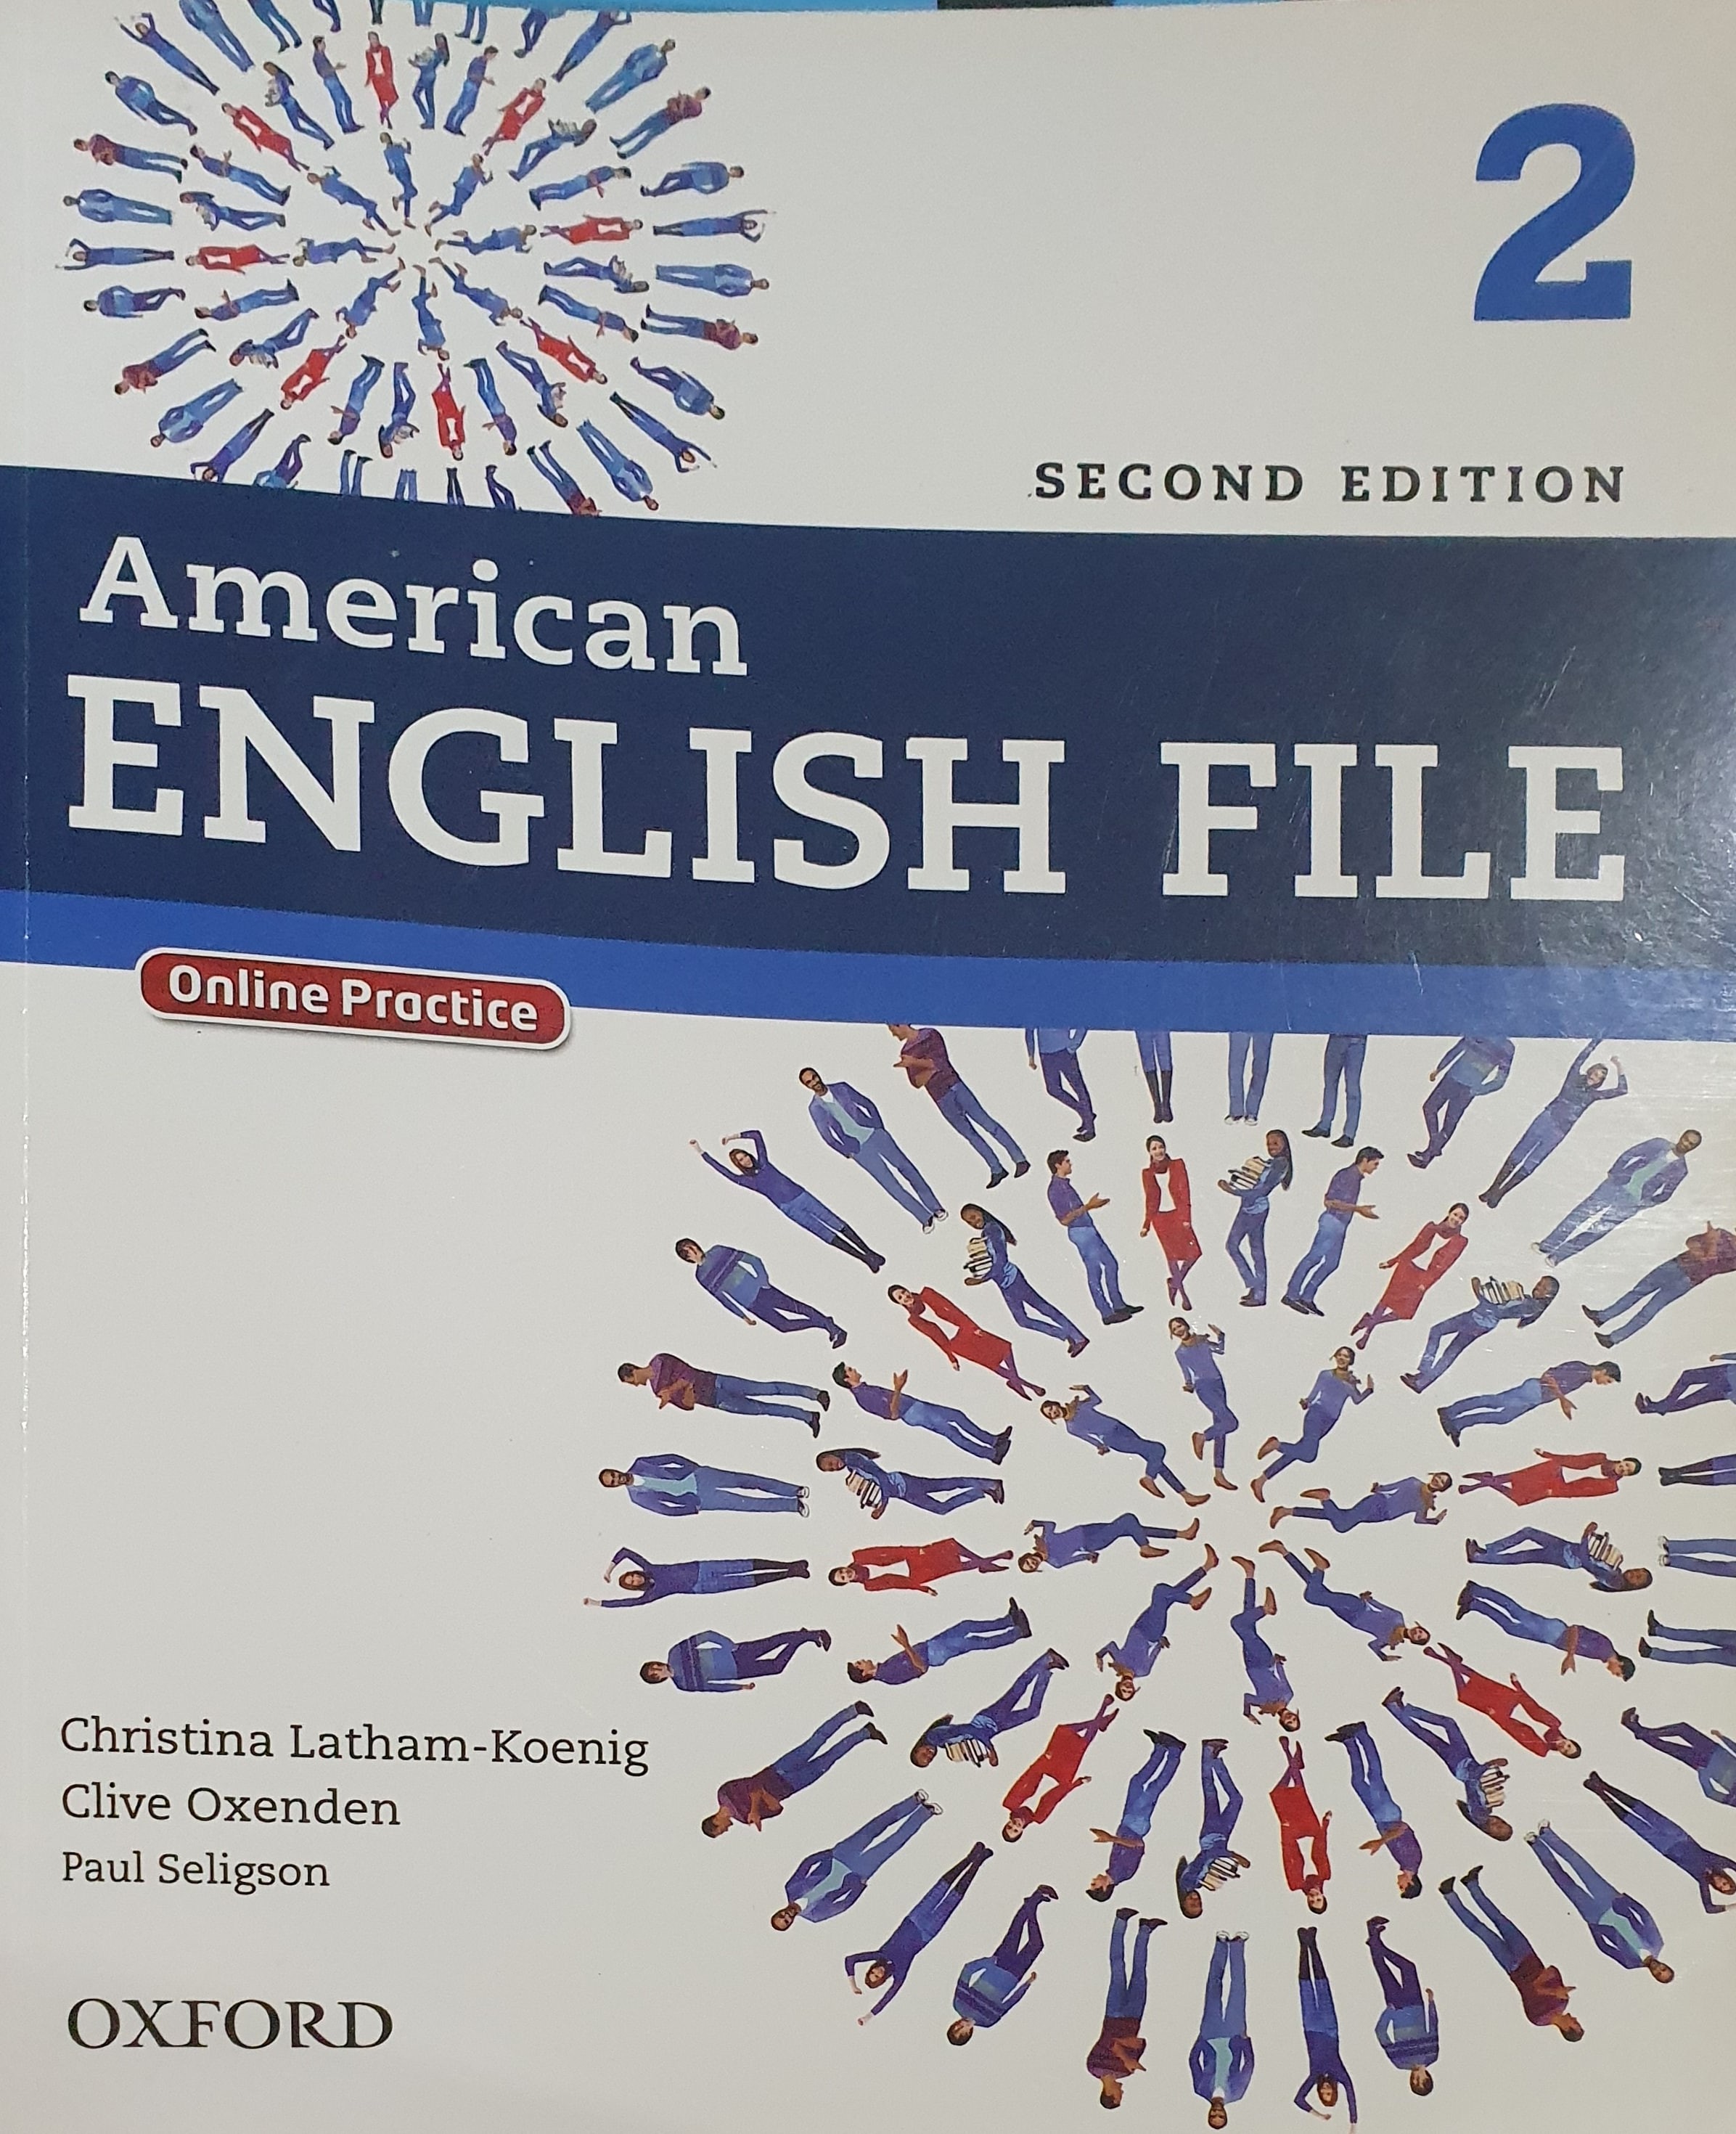 American English File 2 - Second edition کتاب دست دوم